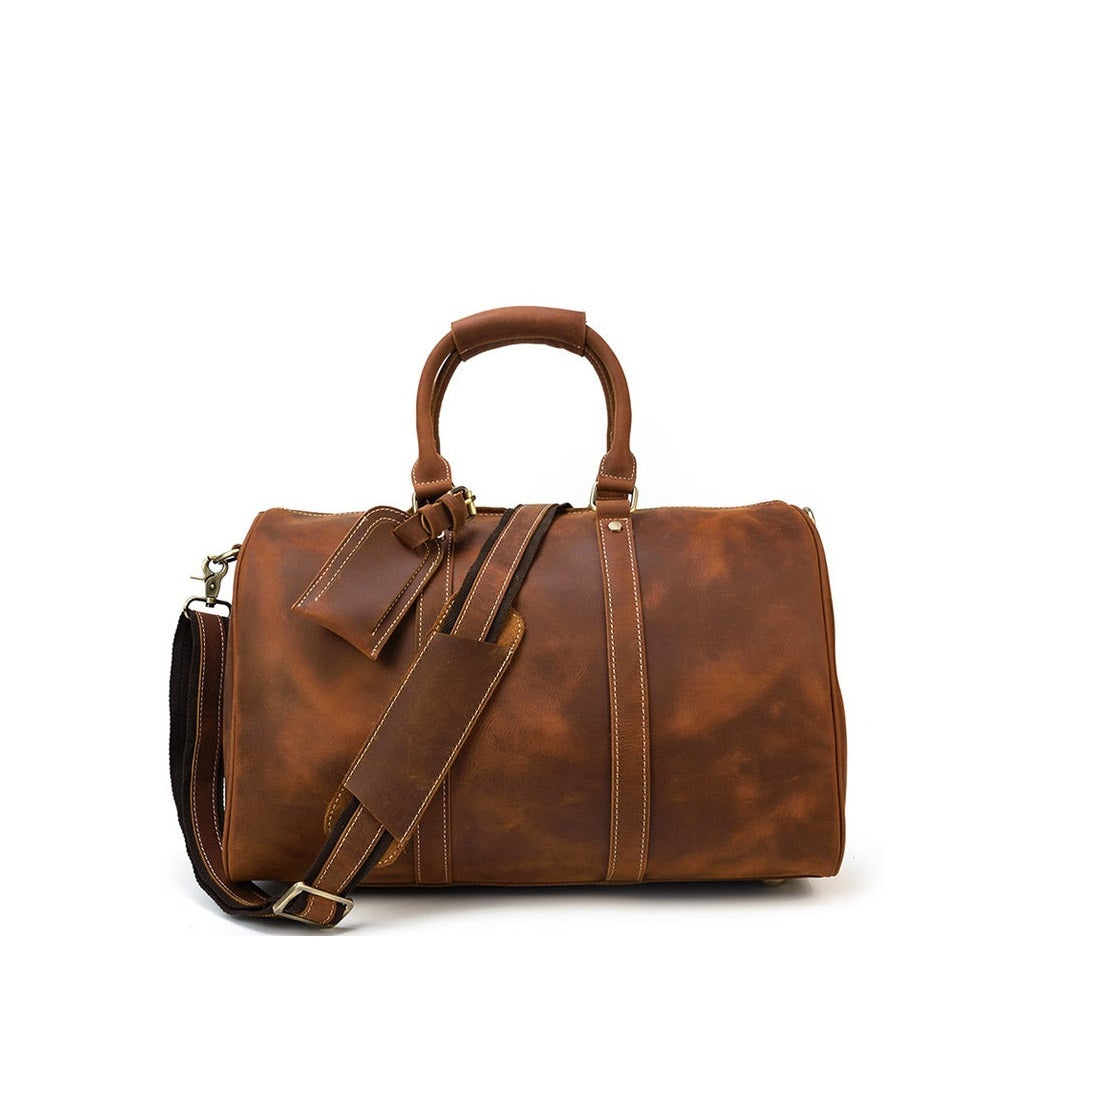 Leather travel Bag